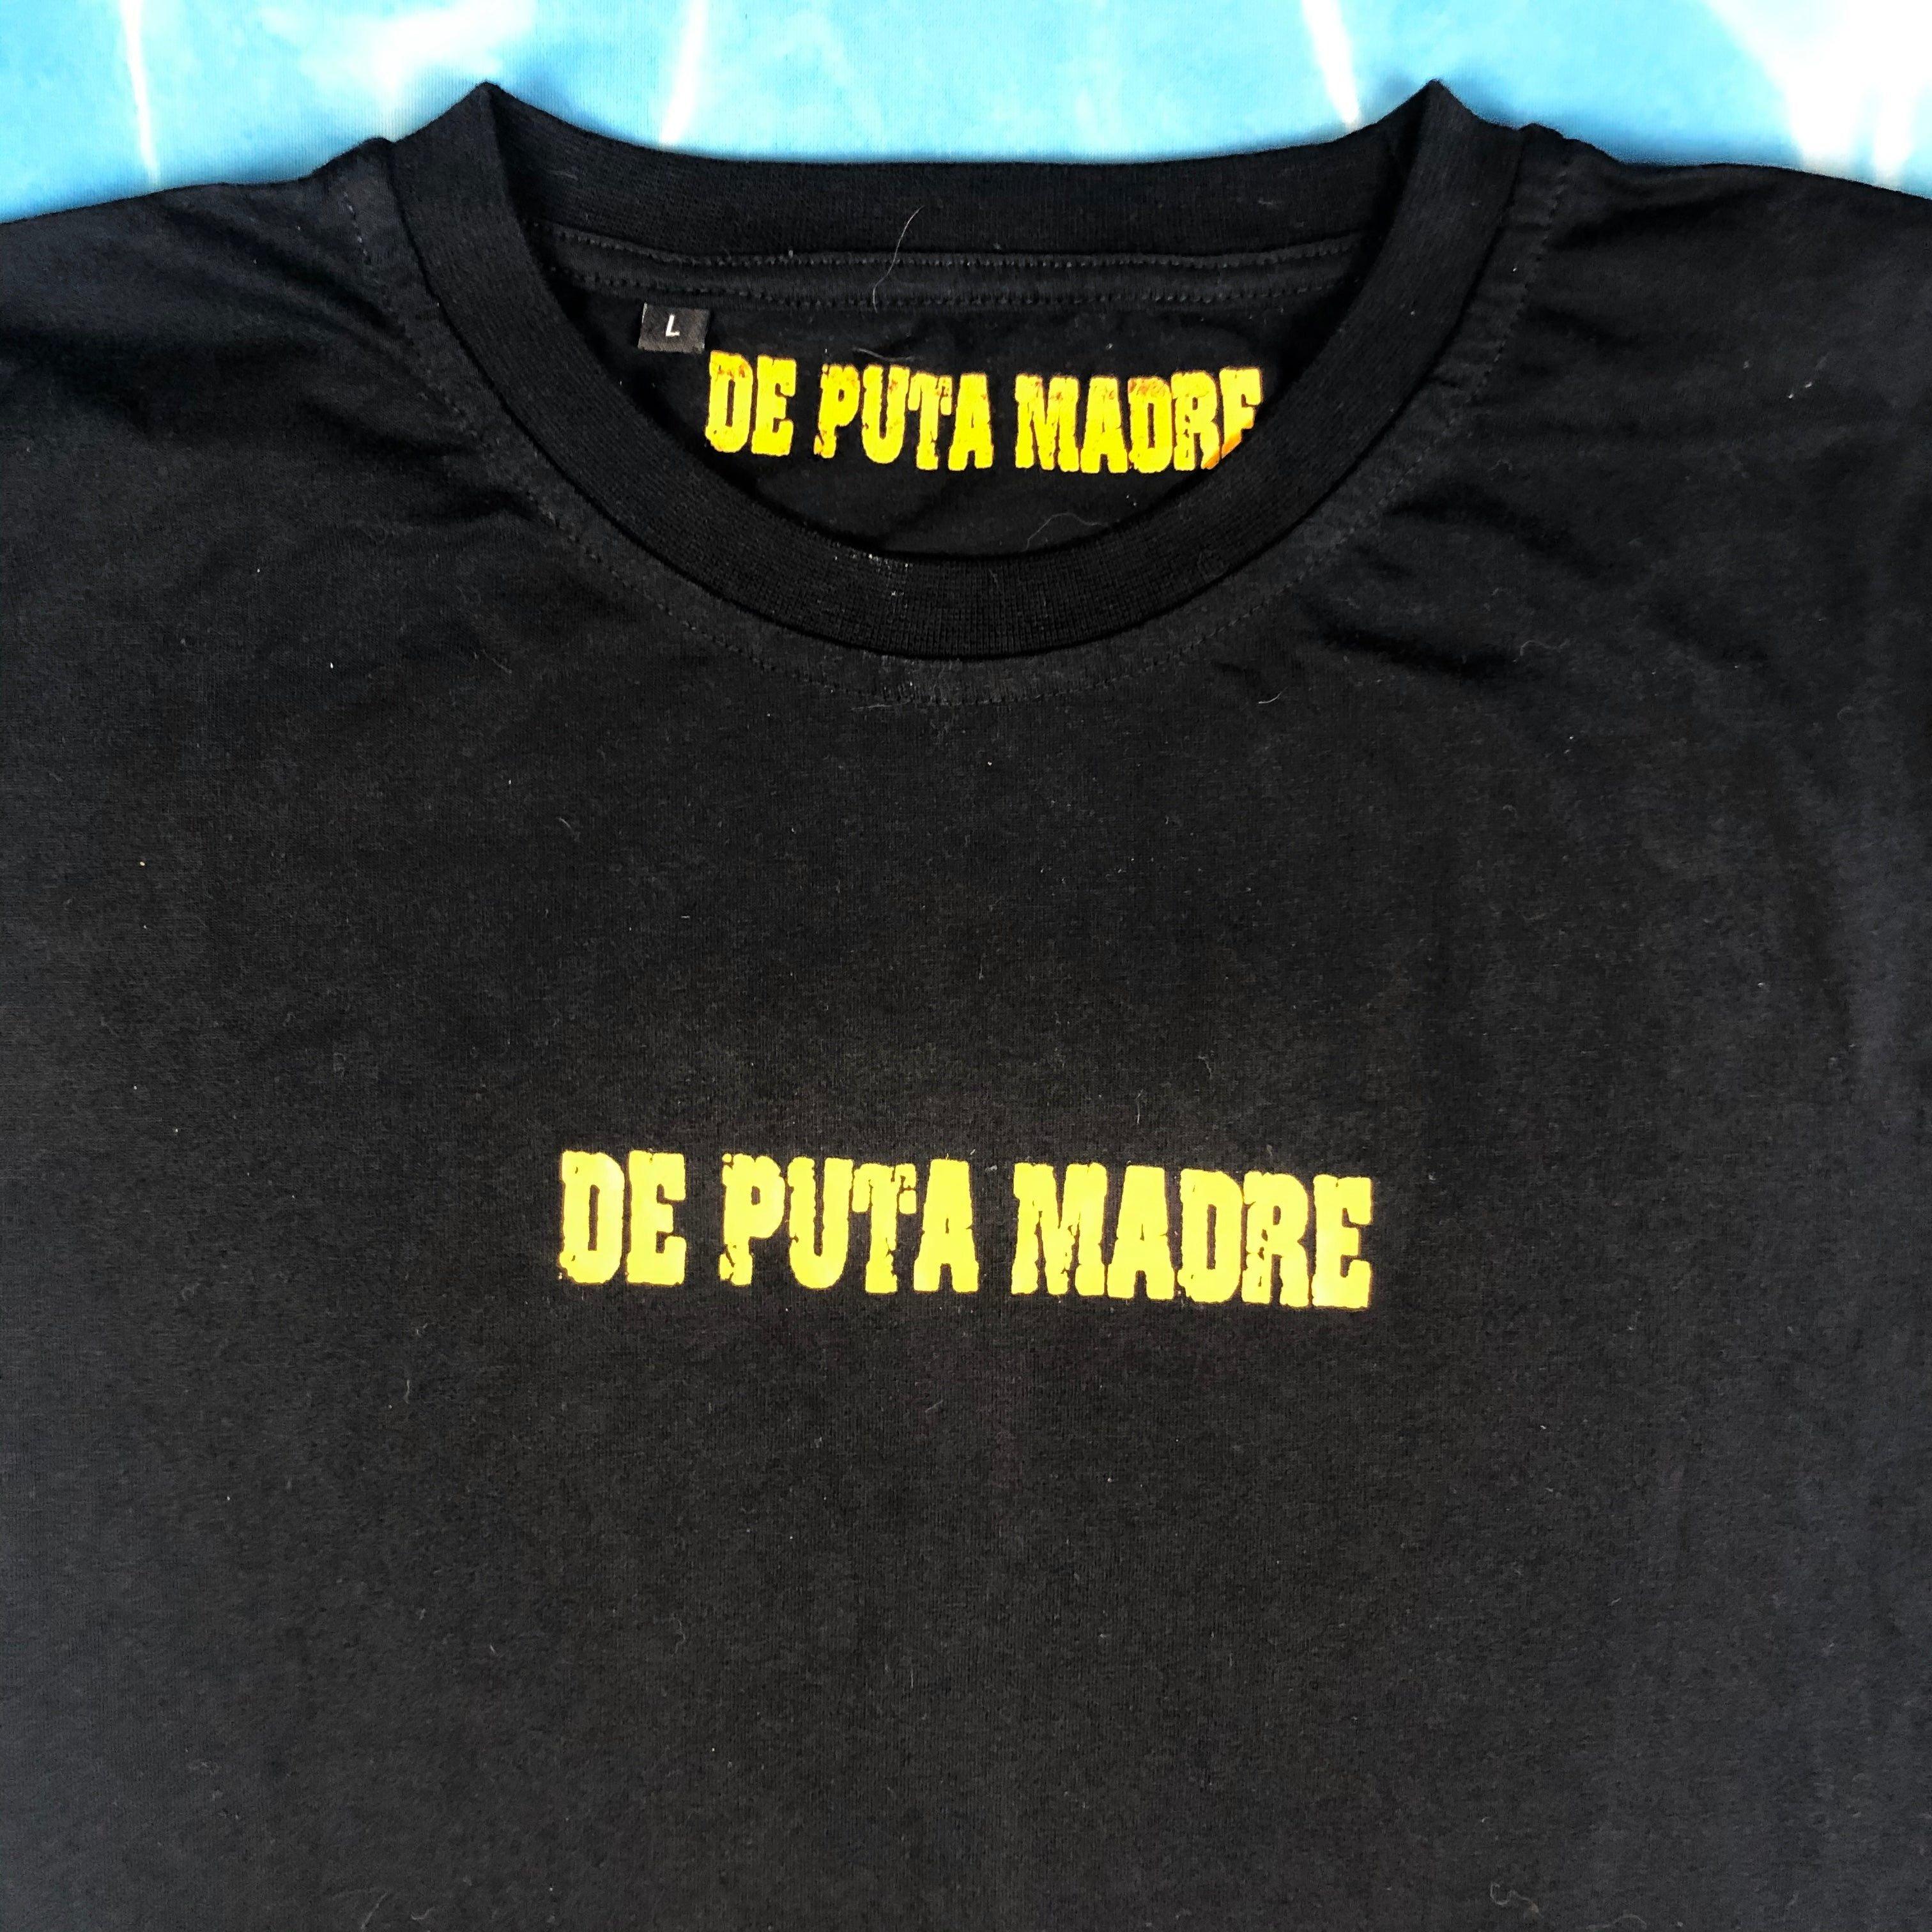 New De Puta Madre Crew Neck Black Logo T Shirt Size M Ebay